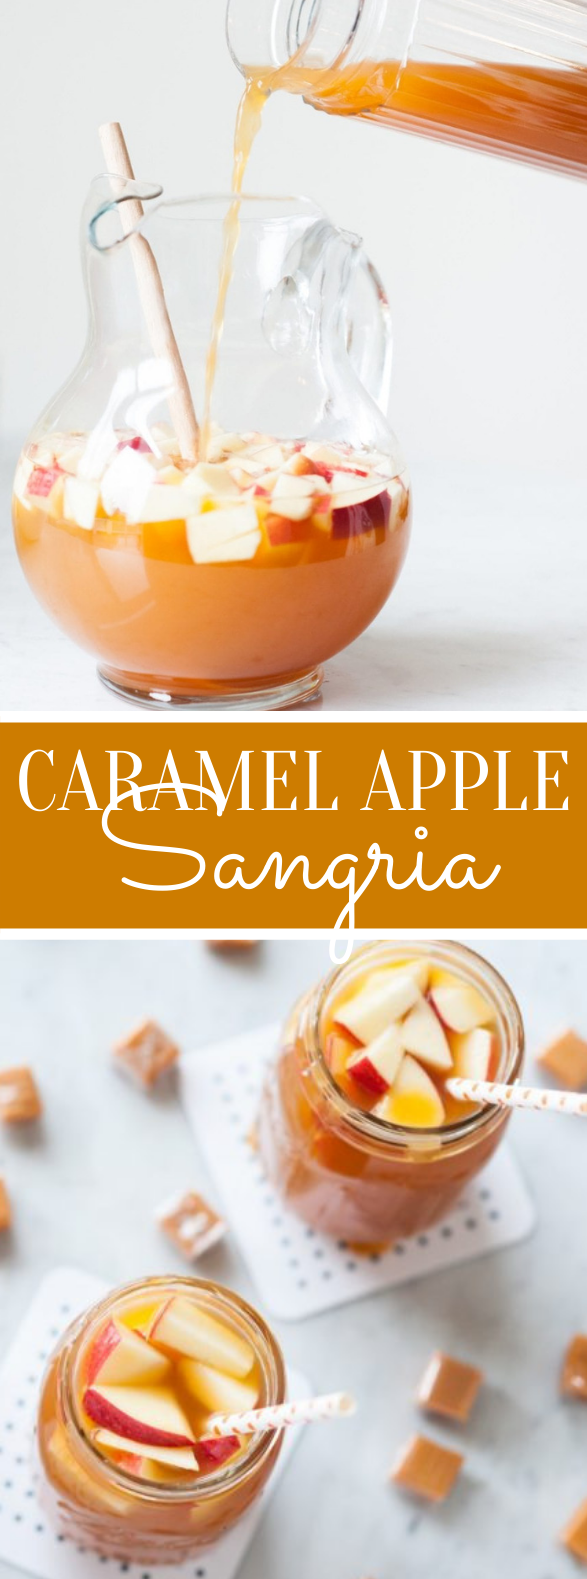 CARAMEL APPLE SANGRIA #drinks #sweets